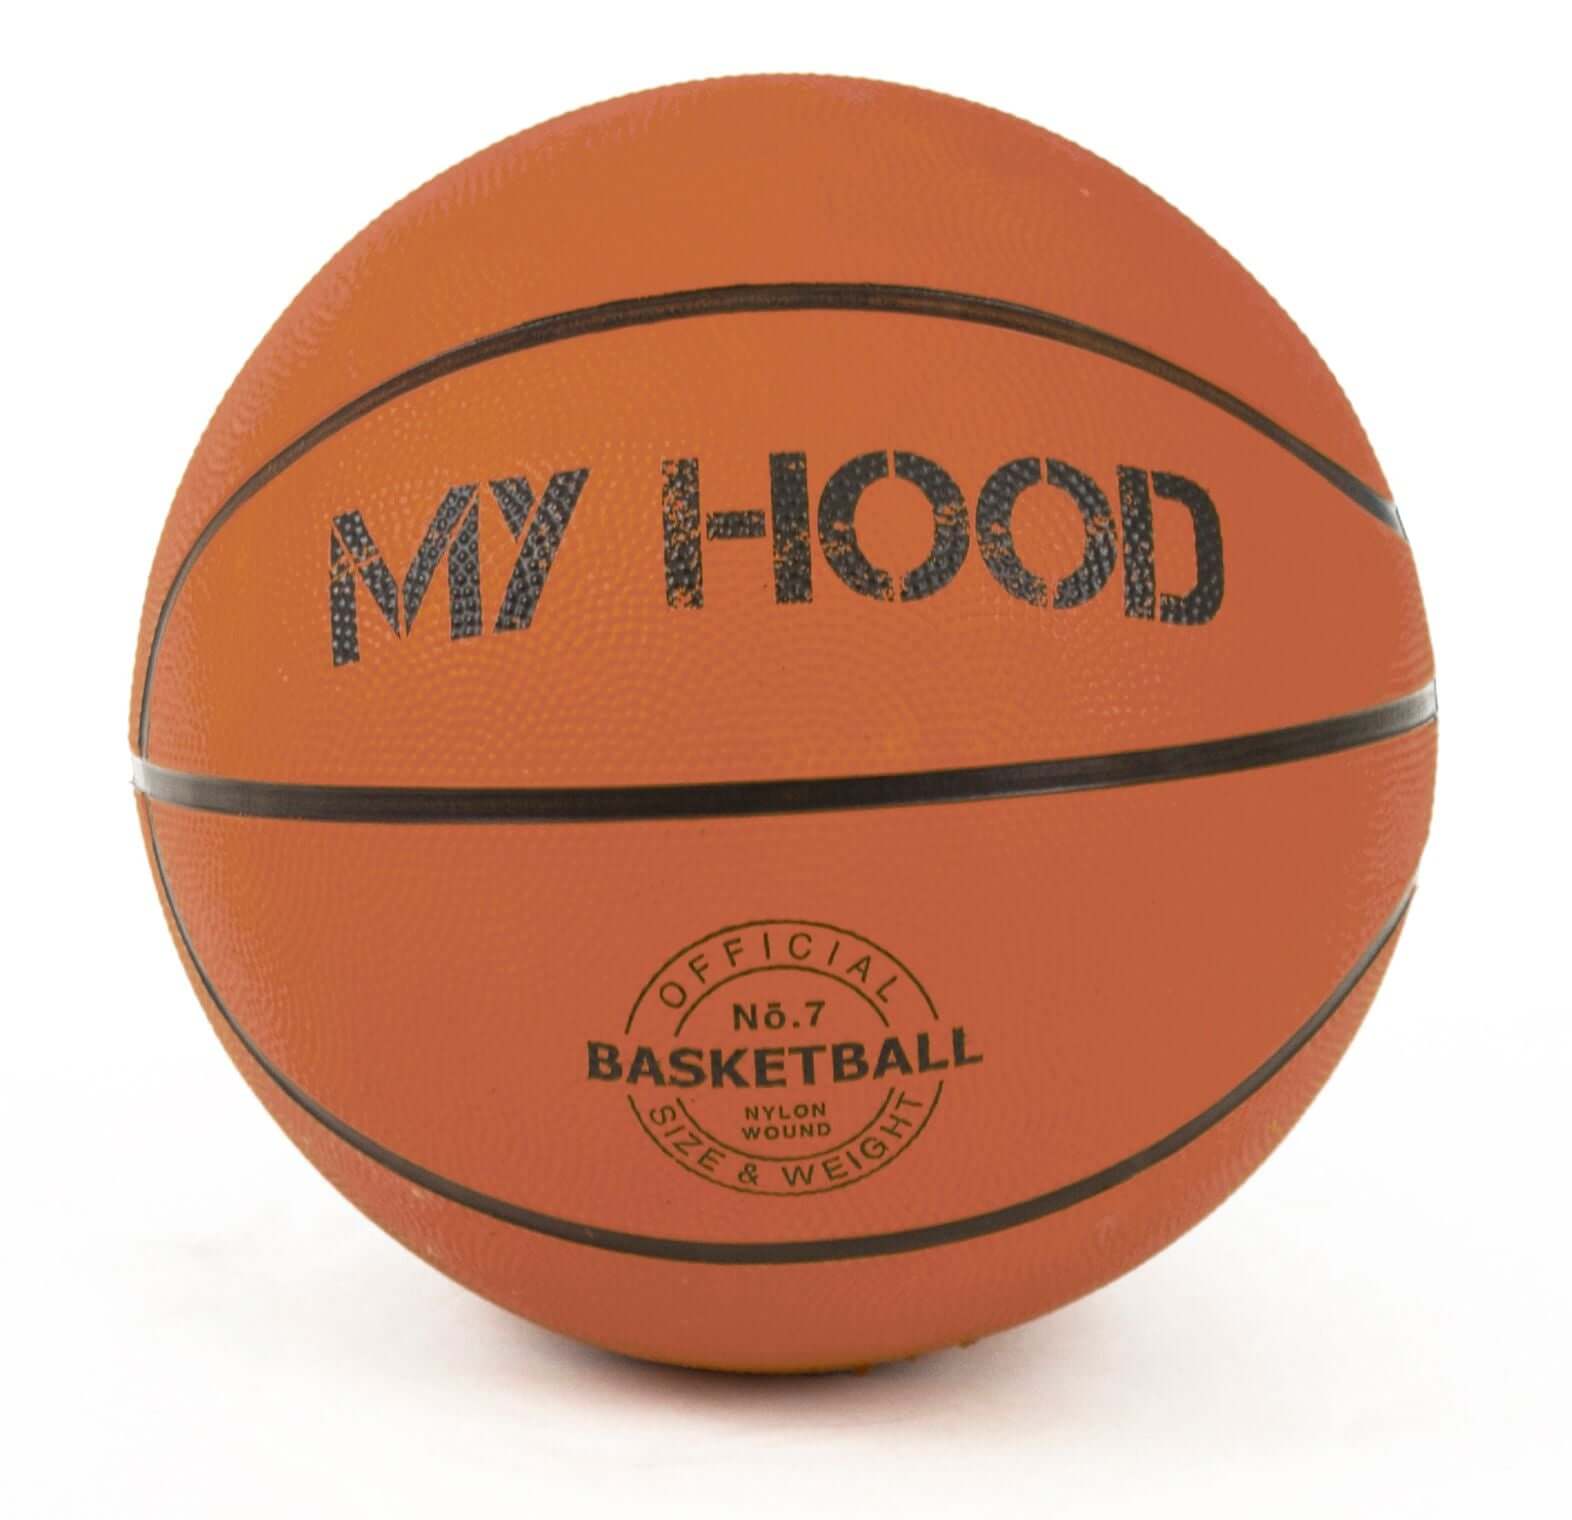 My Hood Basketball (str. 7)